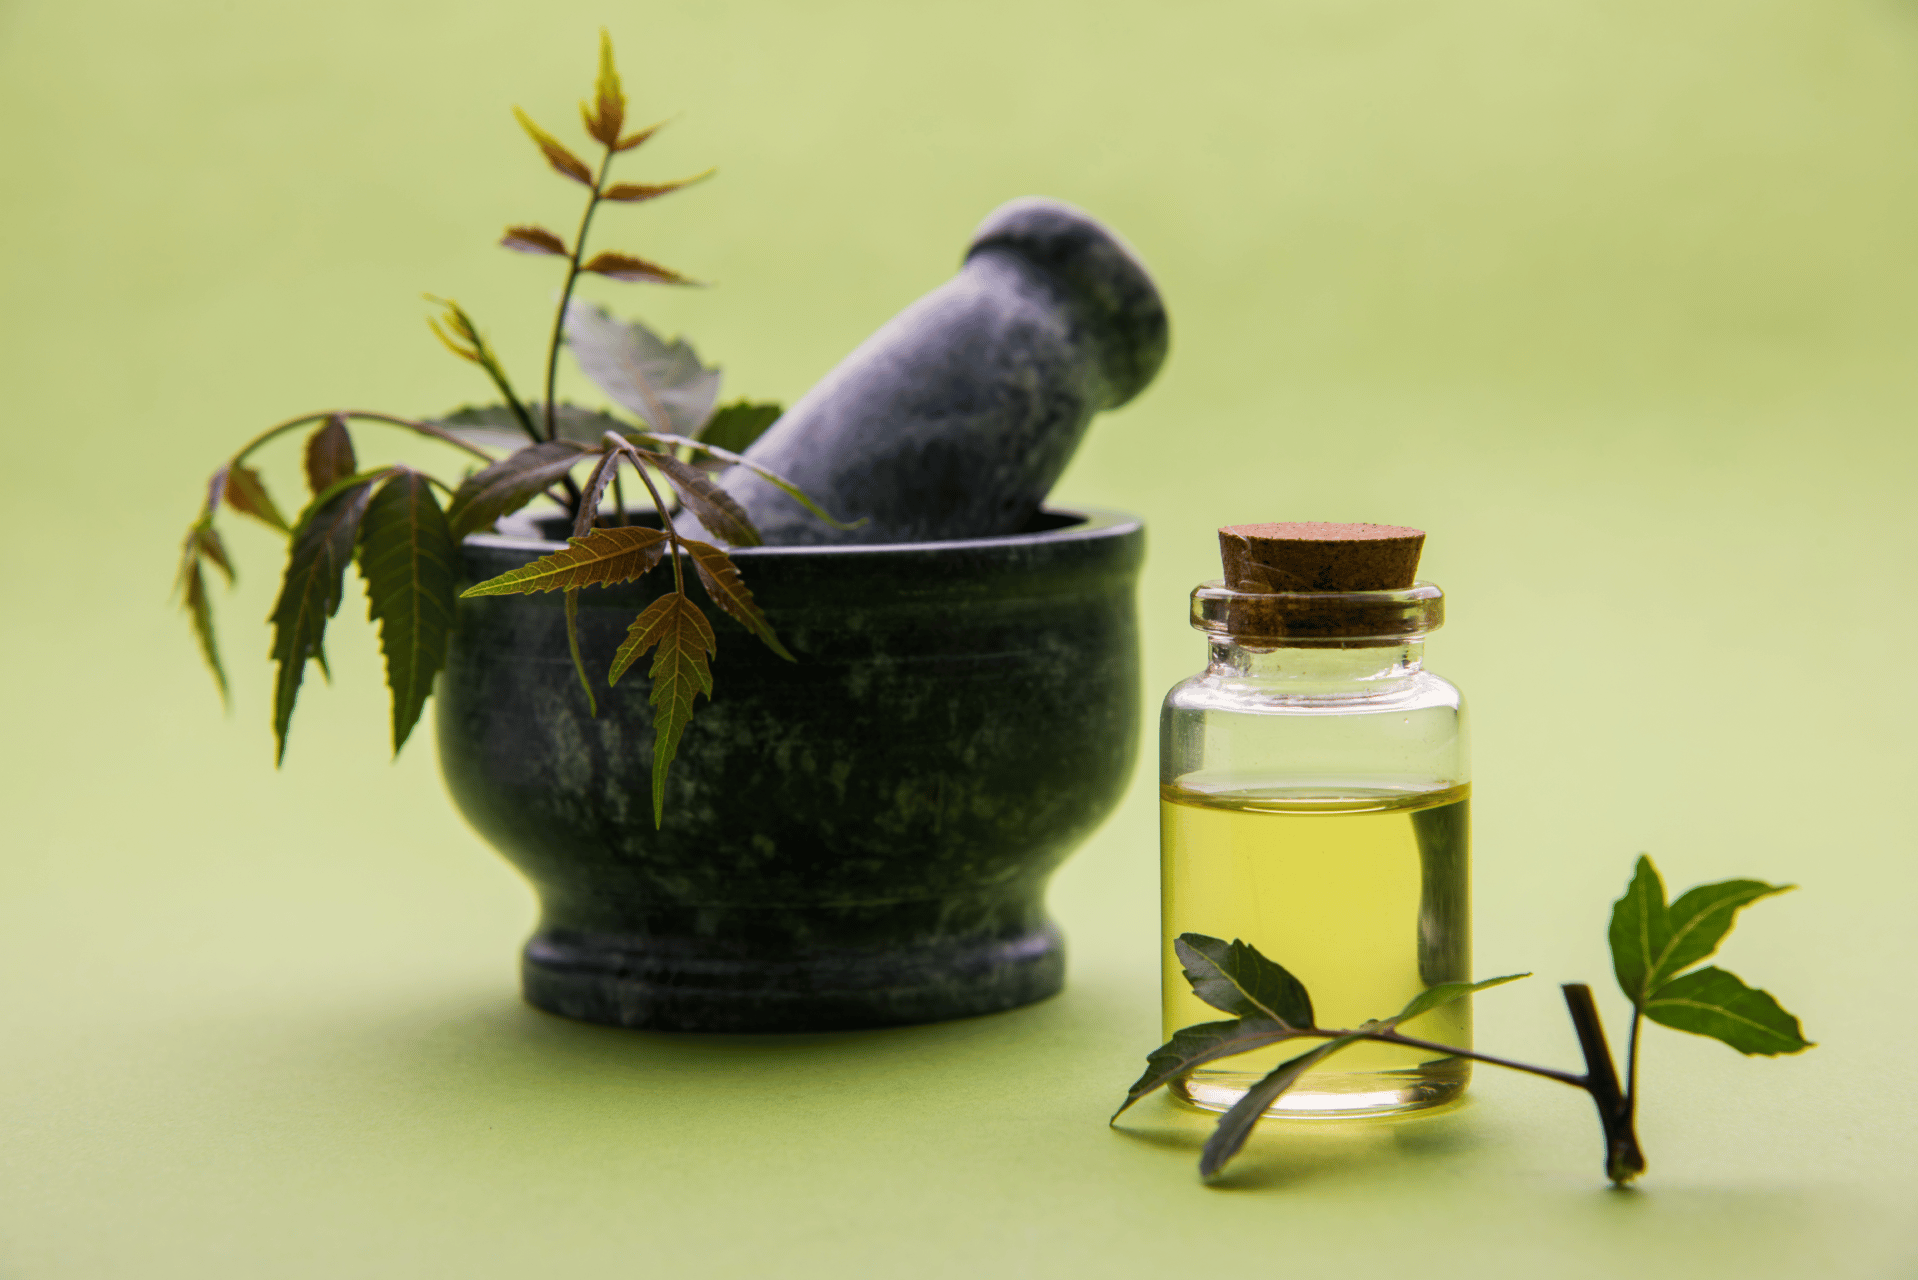 Oxxigena - Olio di neem: a cosa serve?